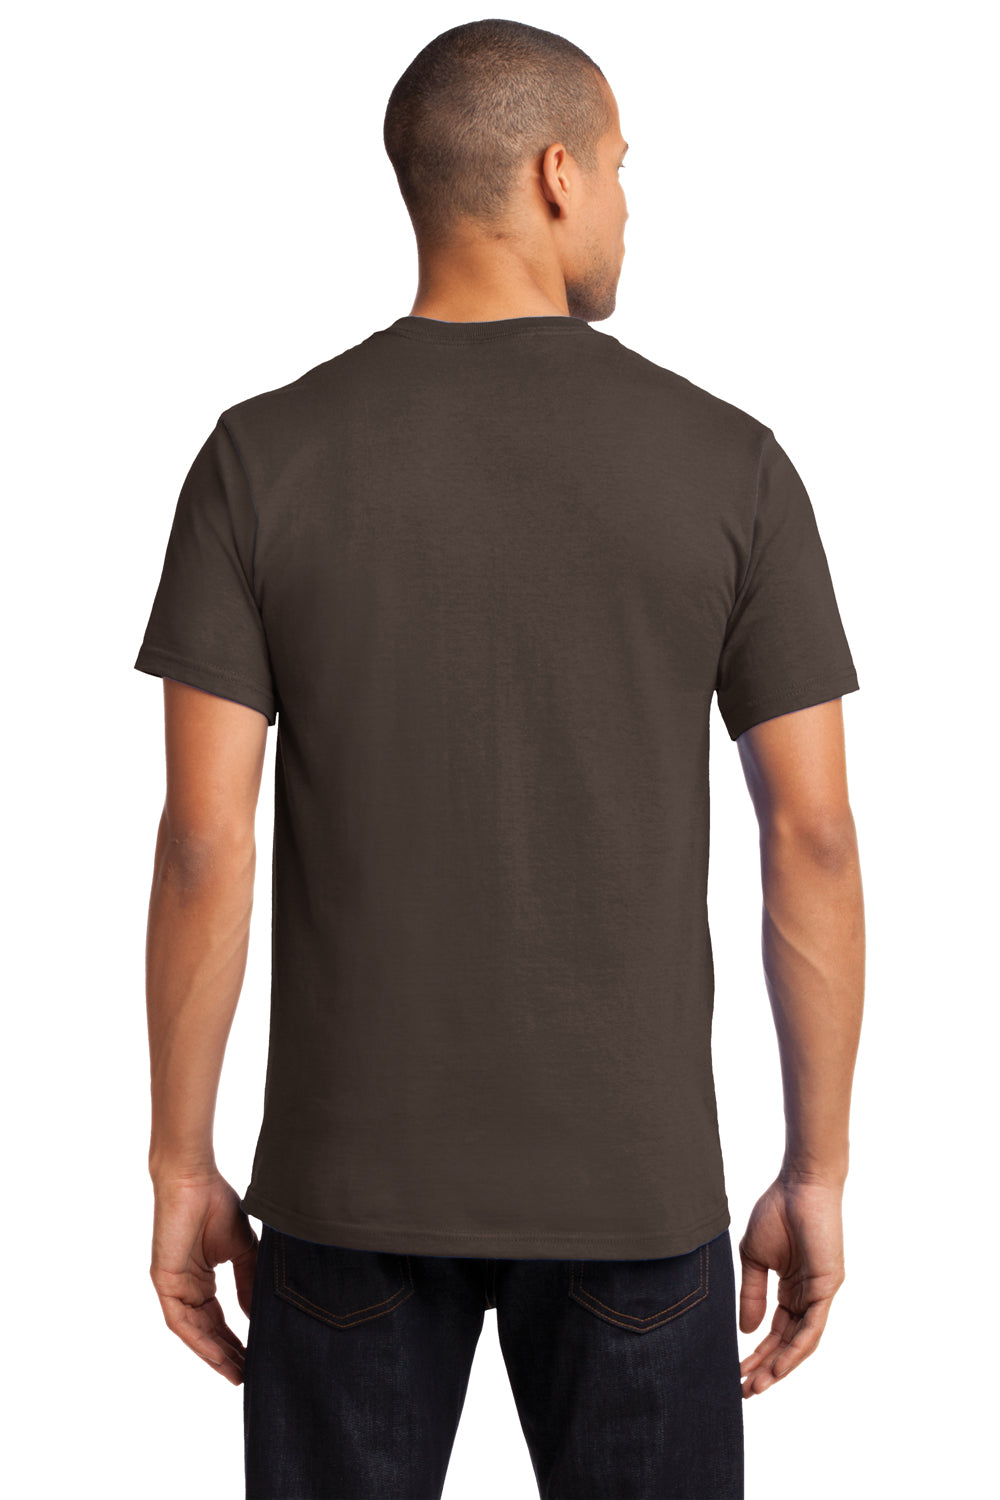 Port & Company PC61P Mens Essential Short Sleeve Crewneck T-Shirt w/ Pocket Brown Back